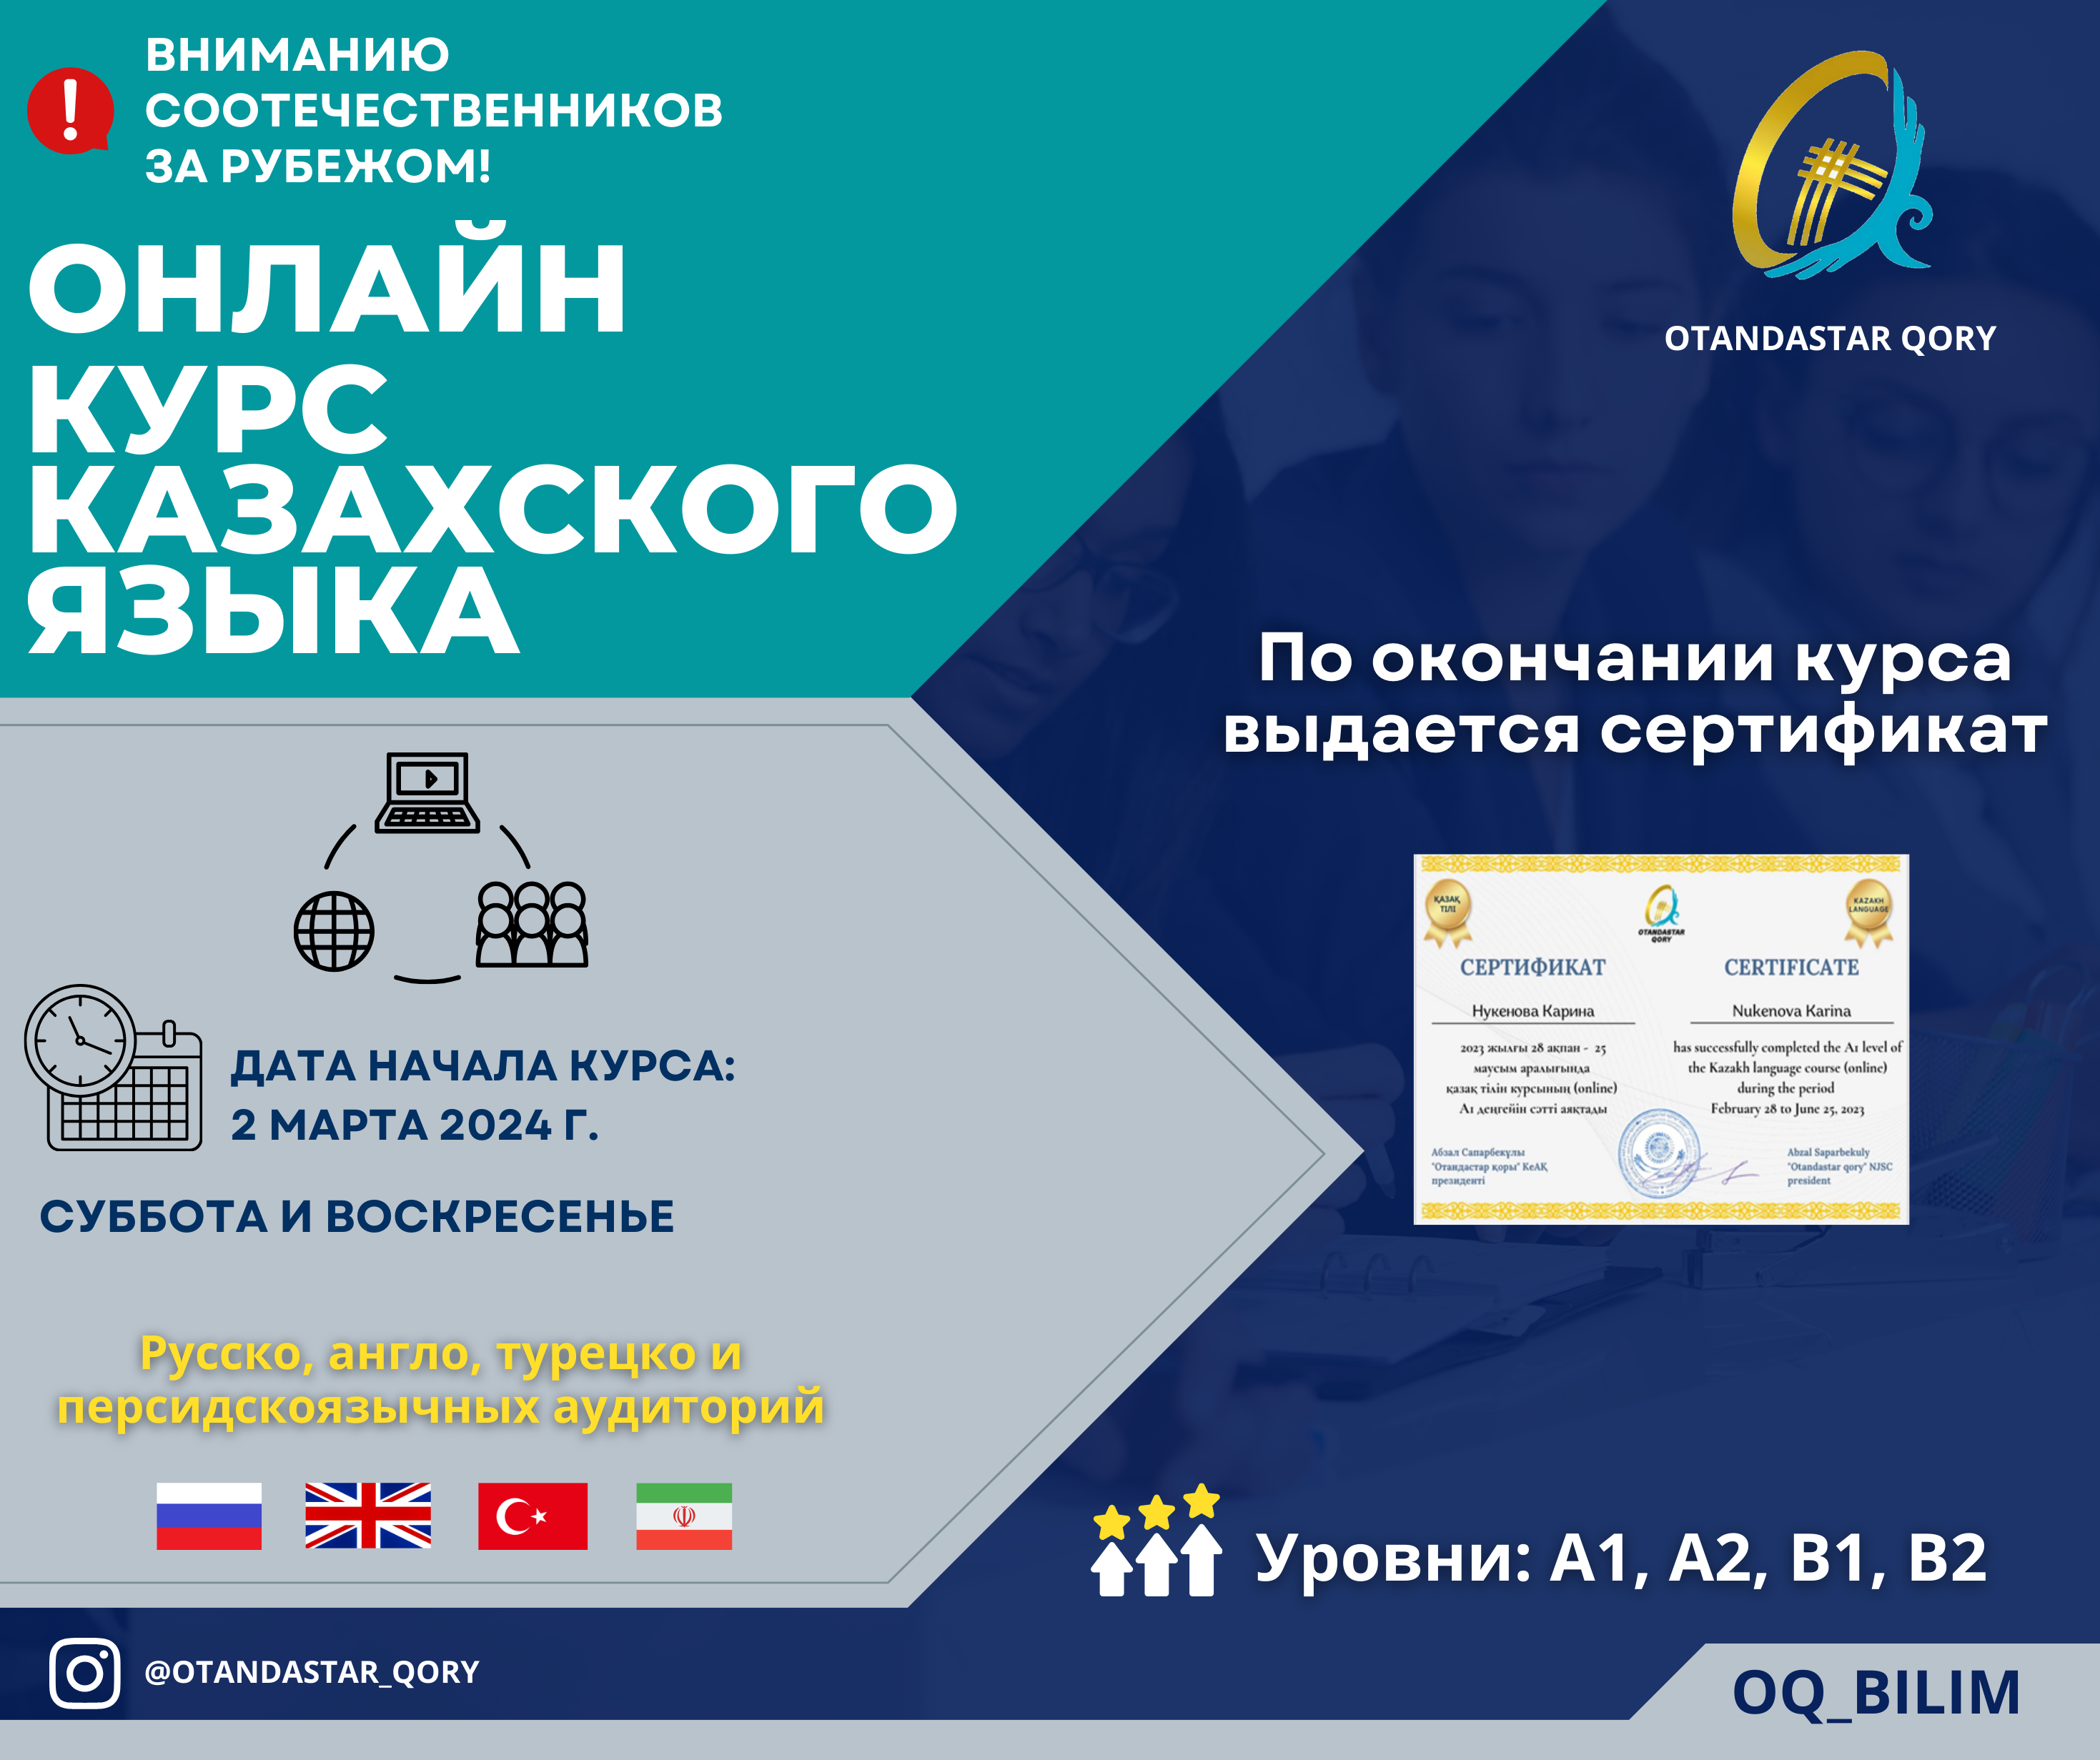 Регистрация на бесплатный онлайн-курс казахского языка от Фонда Отандастар открыта!